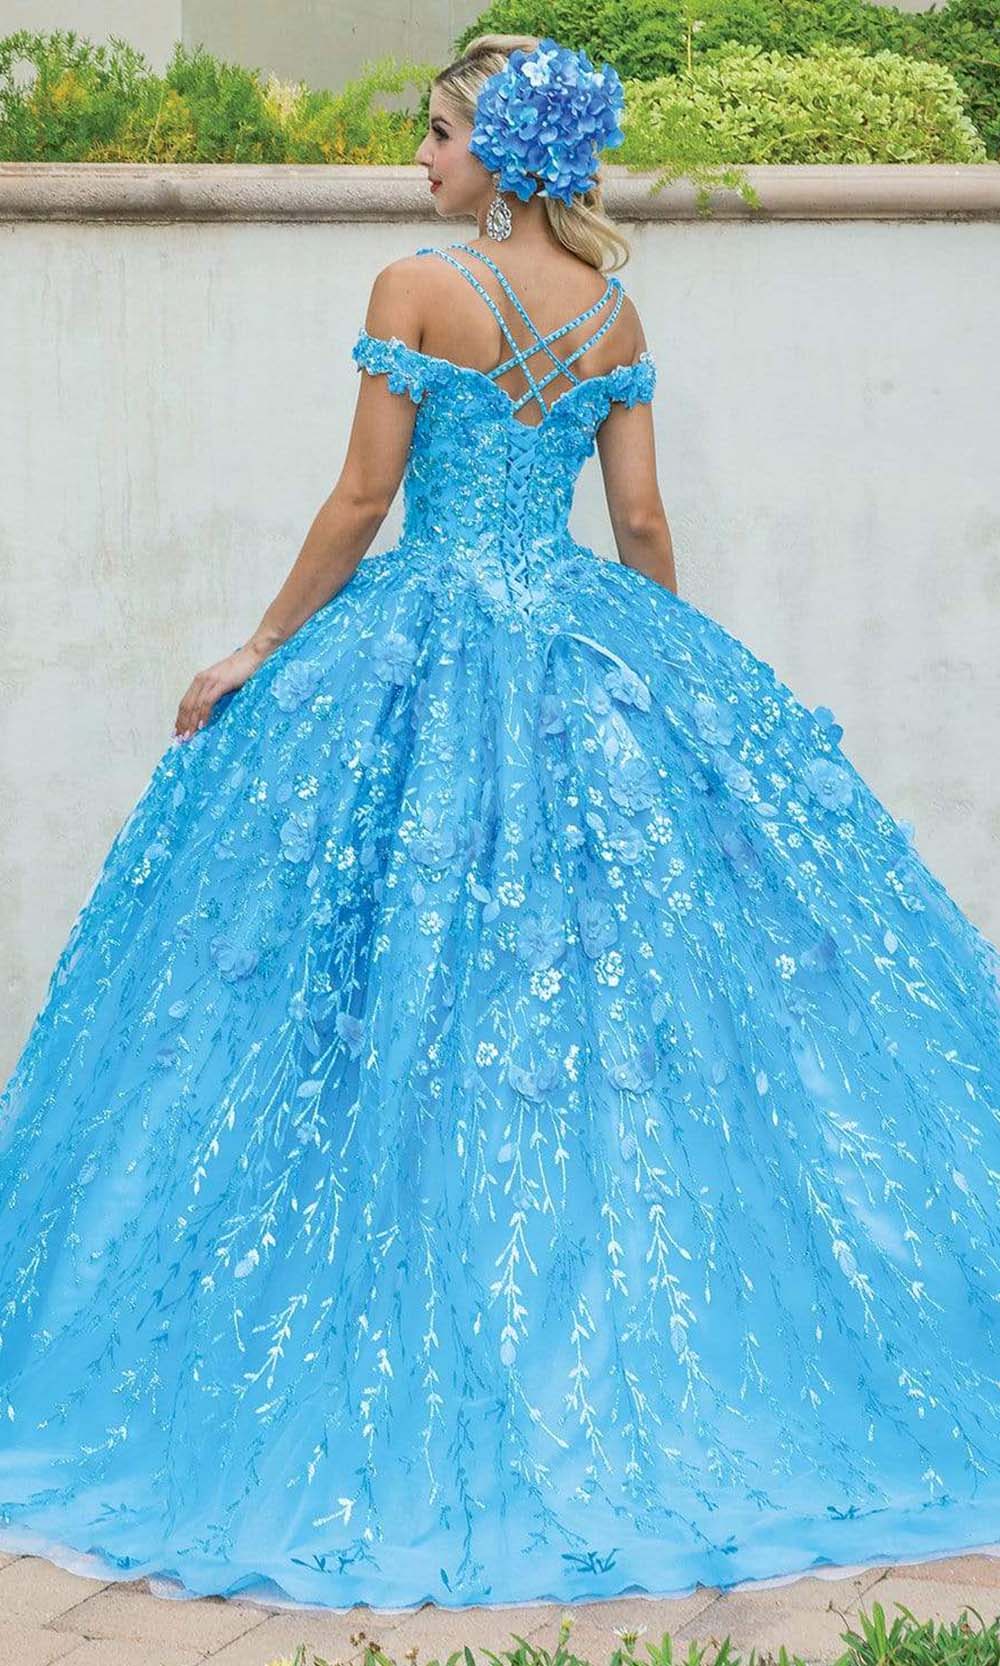 Dancing Queen - 1640 3D Floral Applique Corset Lace-Up Back Ballgown Special Occasion Dress